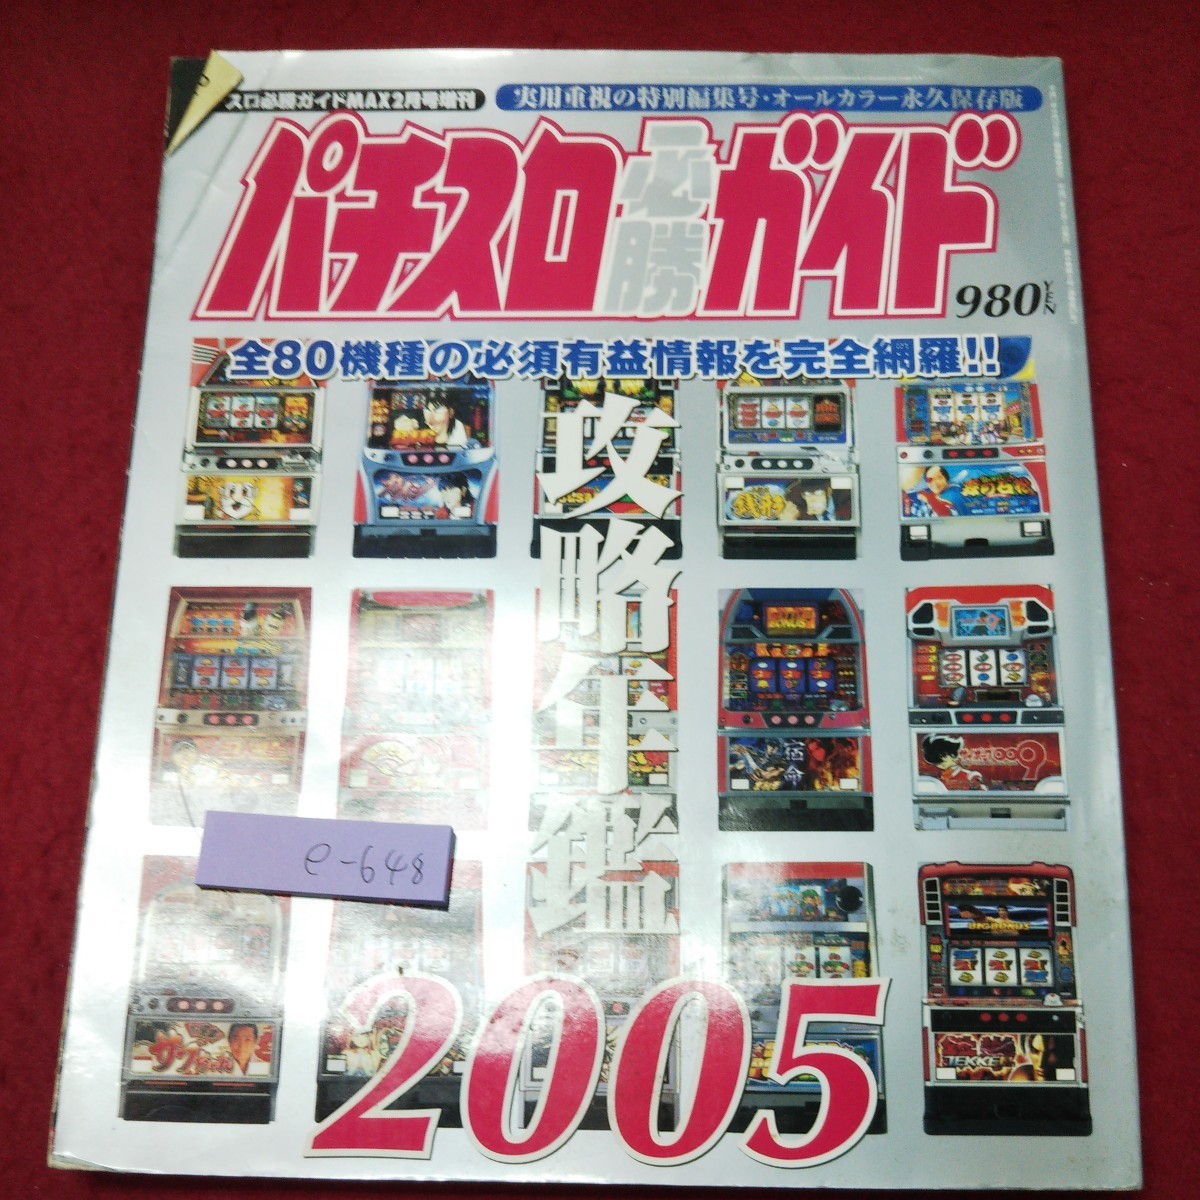 e-648 *9 игровой автомат обязательно . гид MAX 2 месяц номер больше . игровой автомат обязательно . гид .. ежегодник 2005 эпоха Heisei 17 год 2 месяц 1 день выпуск Byakuya-Shobo журнал азартная игра игровой автомат 